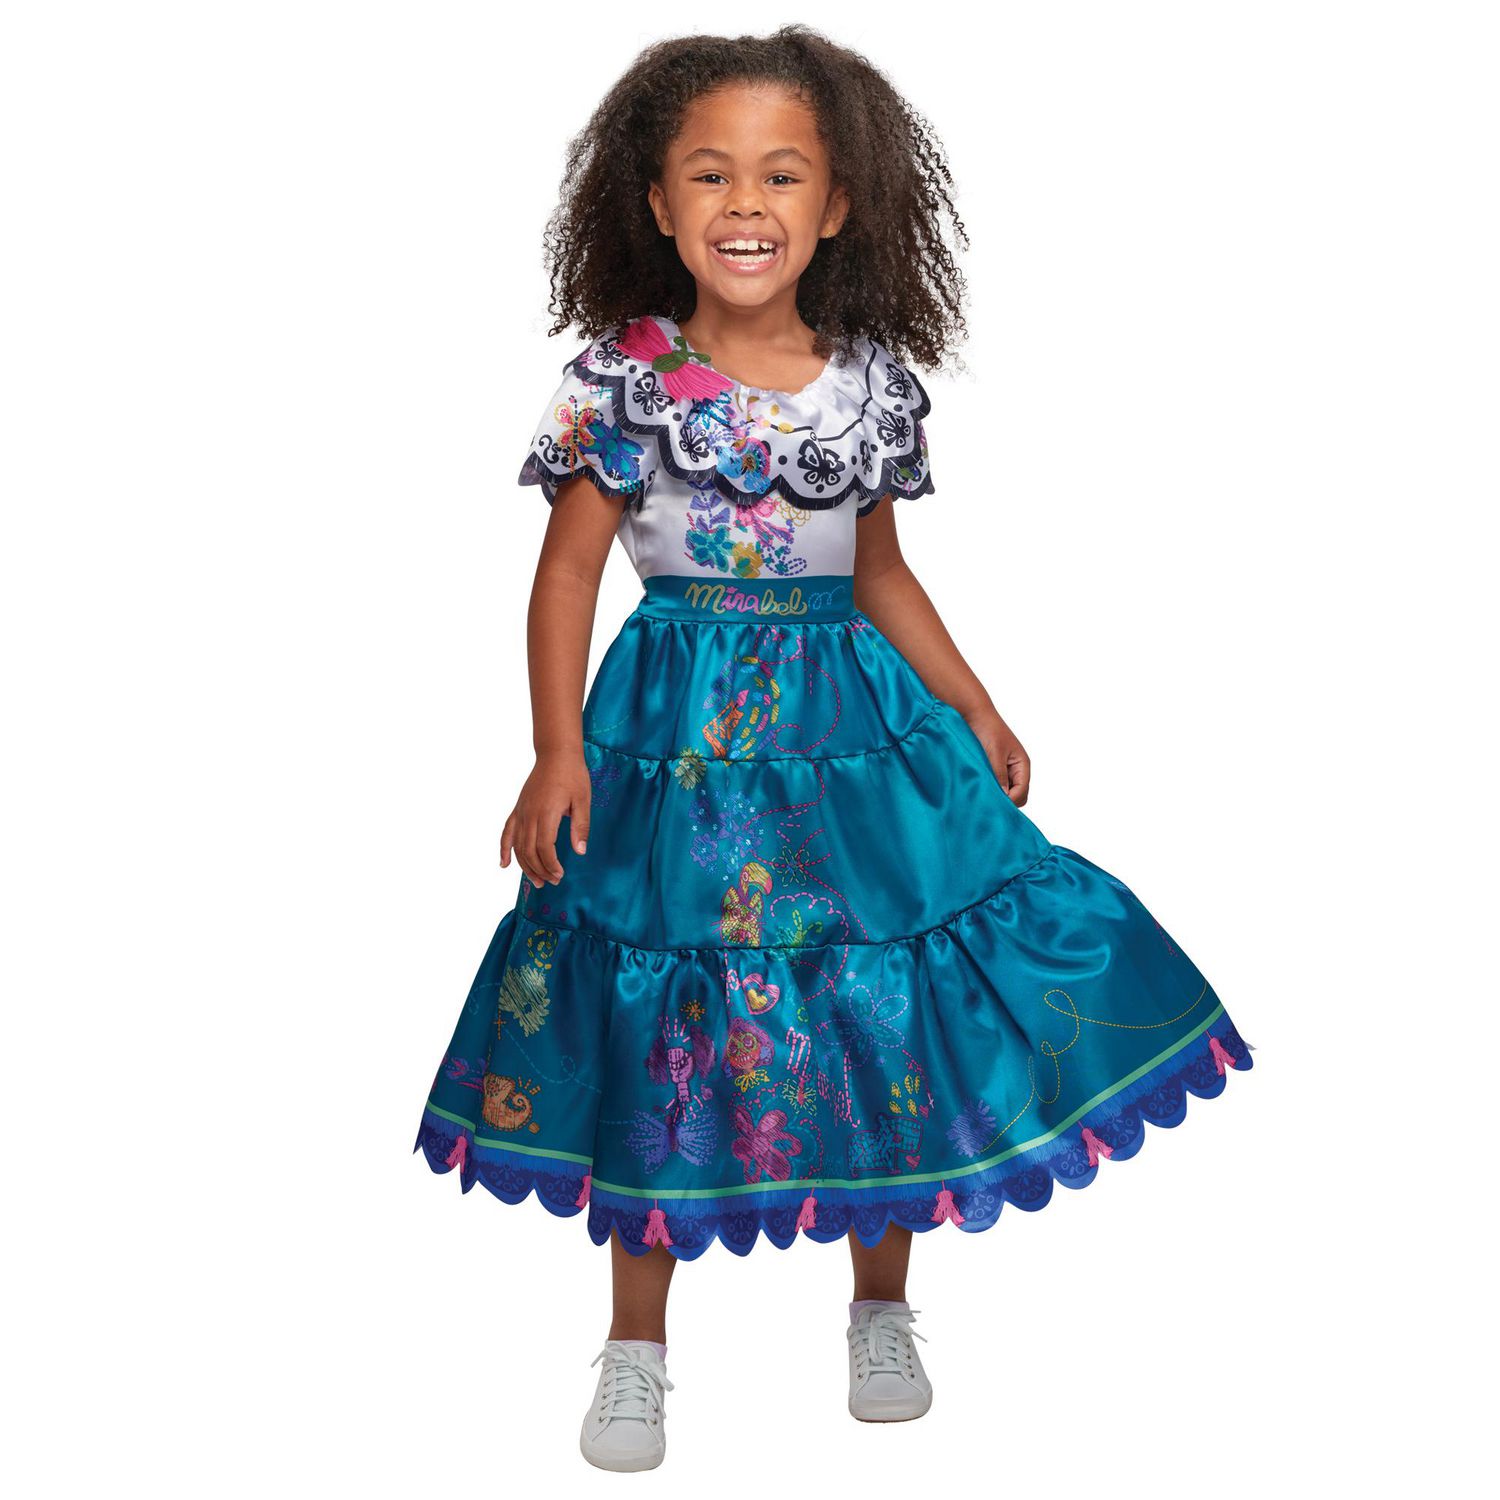 Encanto Disney Mirabel Girl's Fancy-Dress Costume, S (4-6X) 